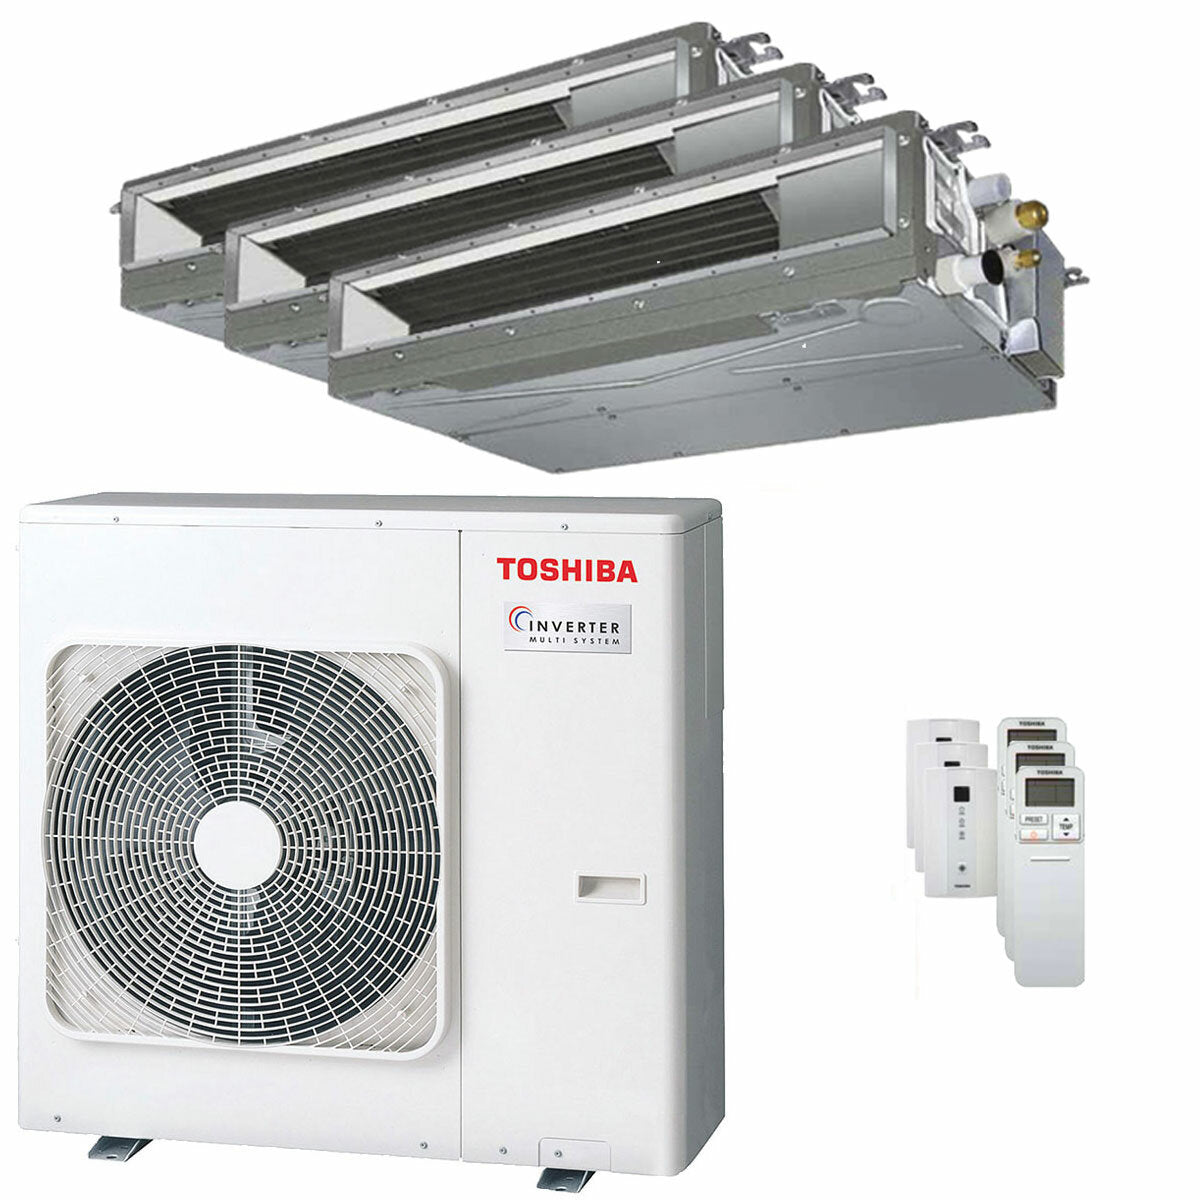 Toshiba ducted air conditioner U2 trial split 9000+9000+22000 BTU inverter A+++ external unit 7 kW